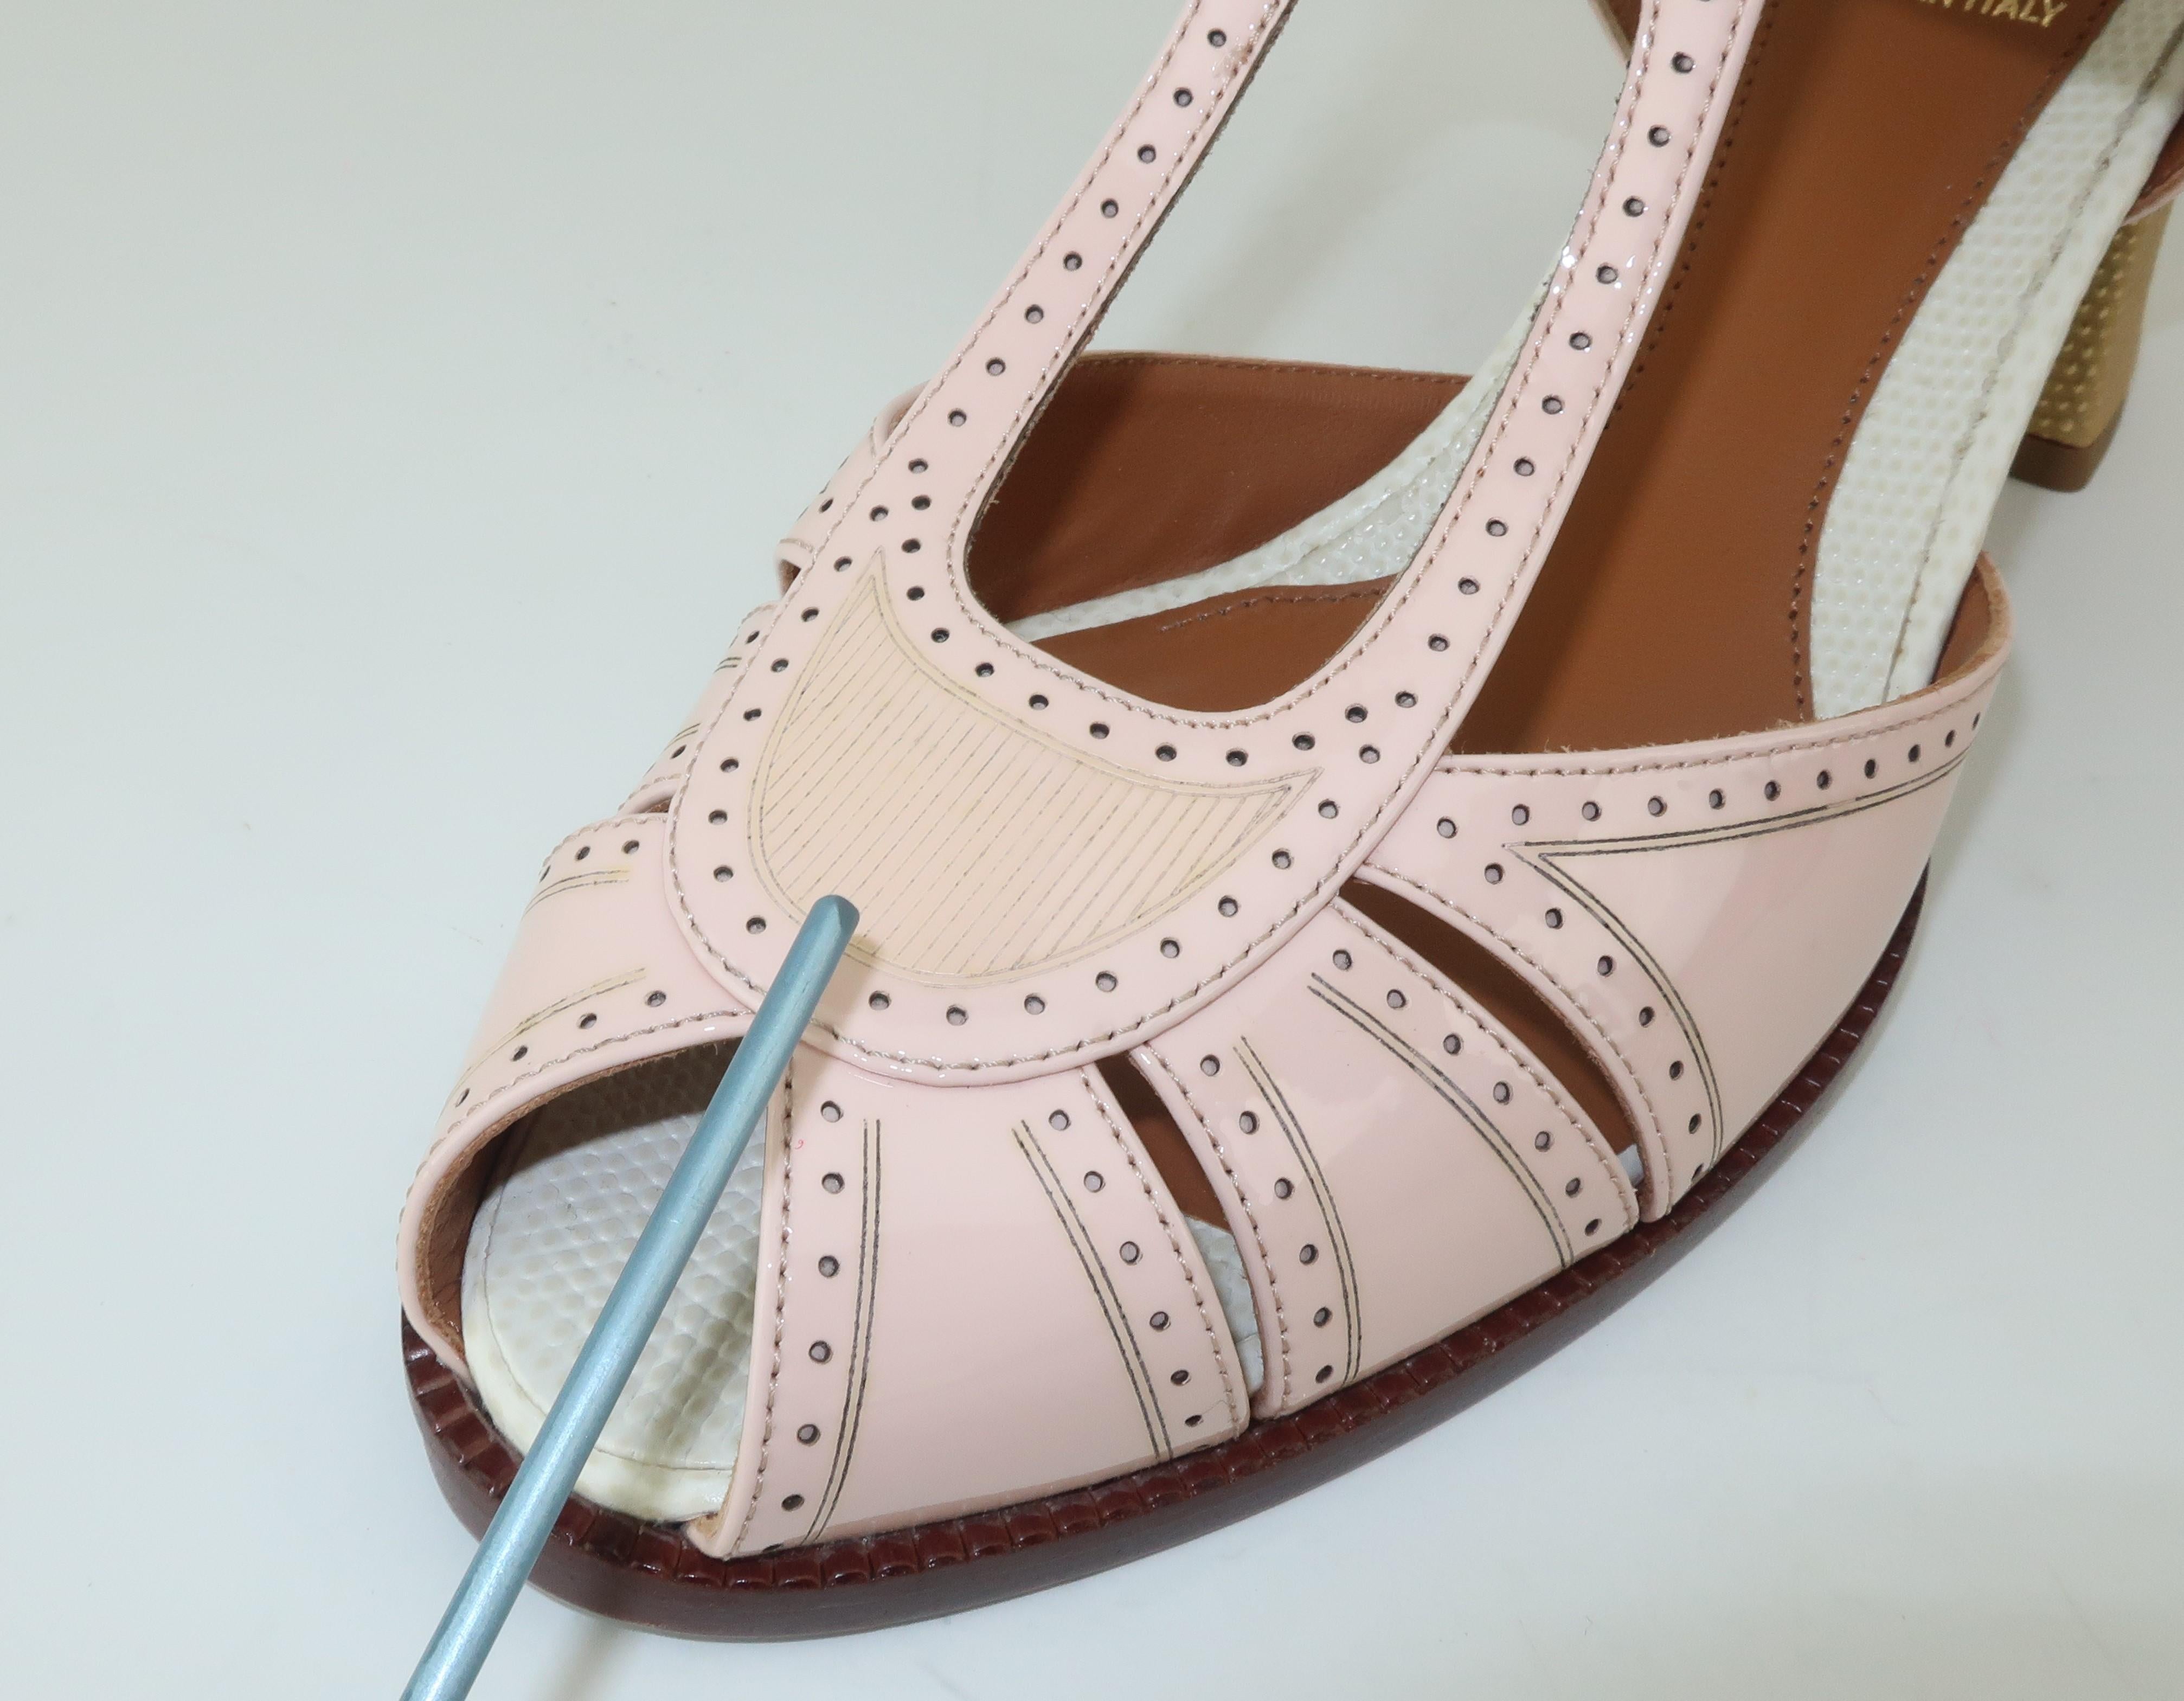 Fendi Pink Patent Leather Spectator Style Shoes Sz 38 3